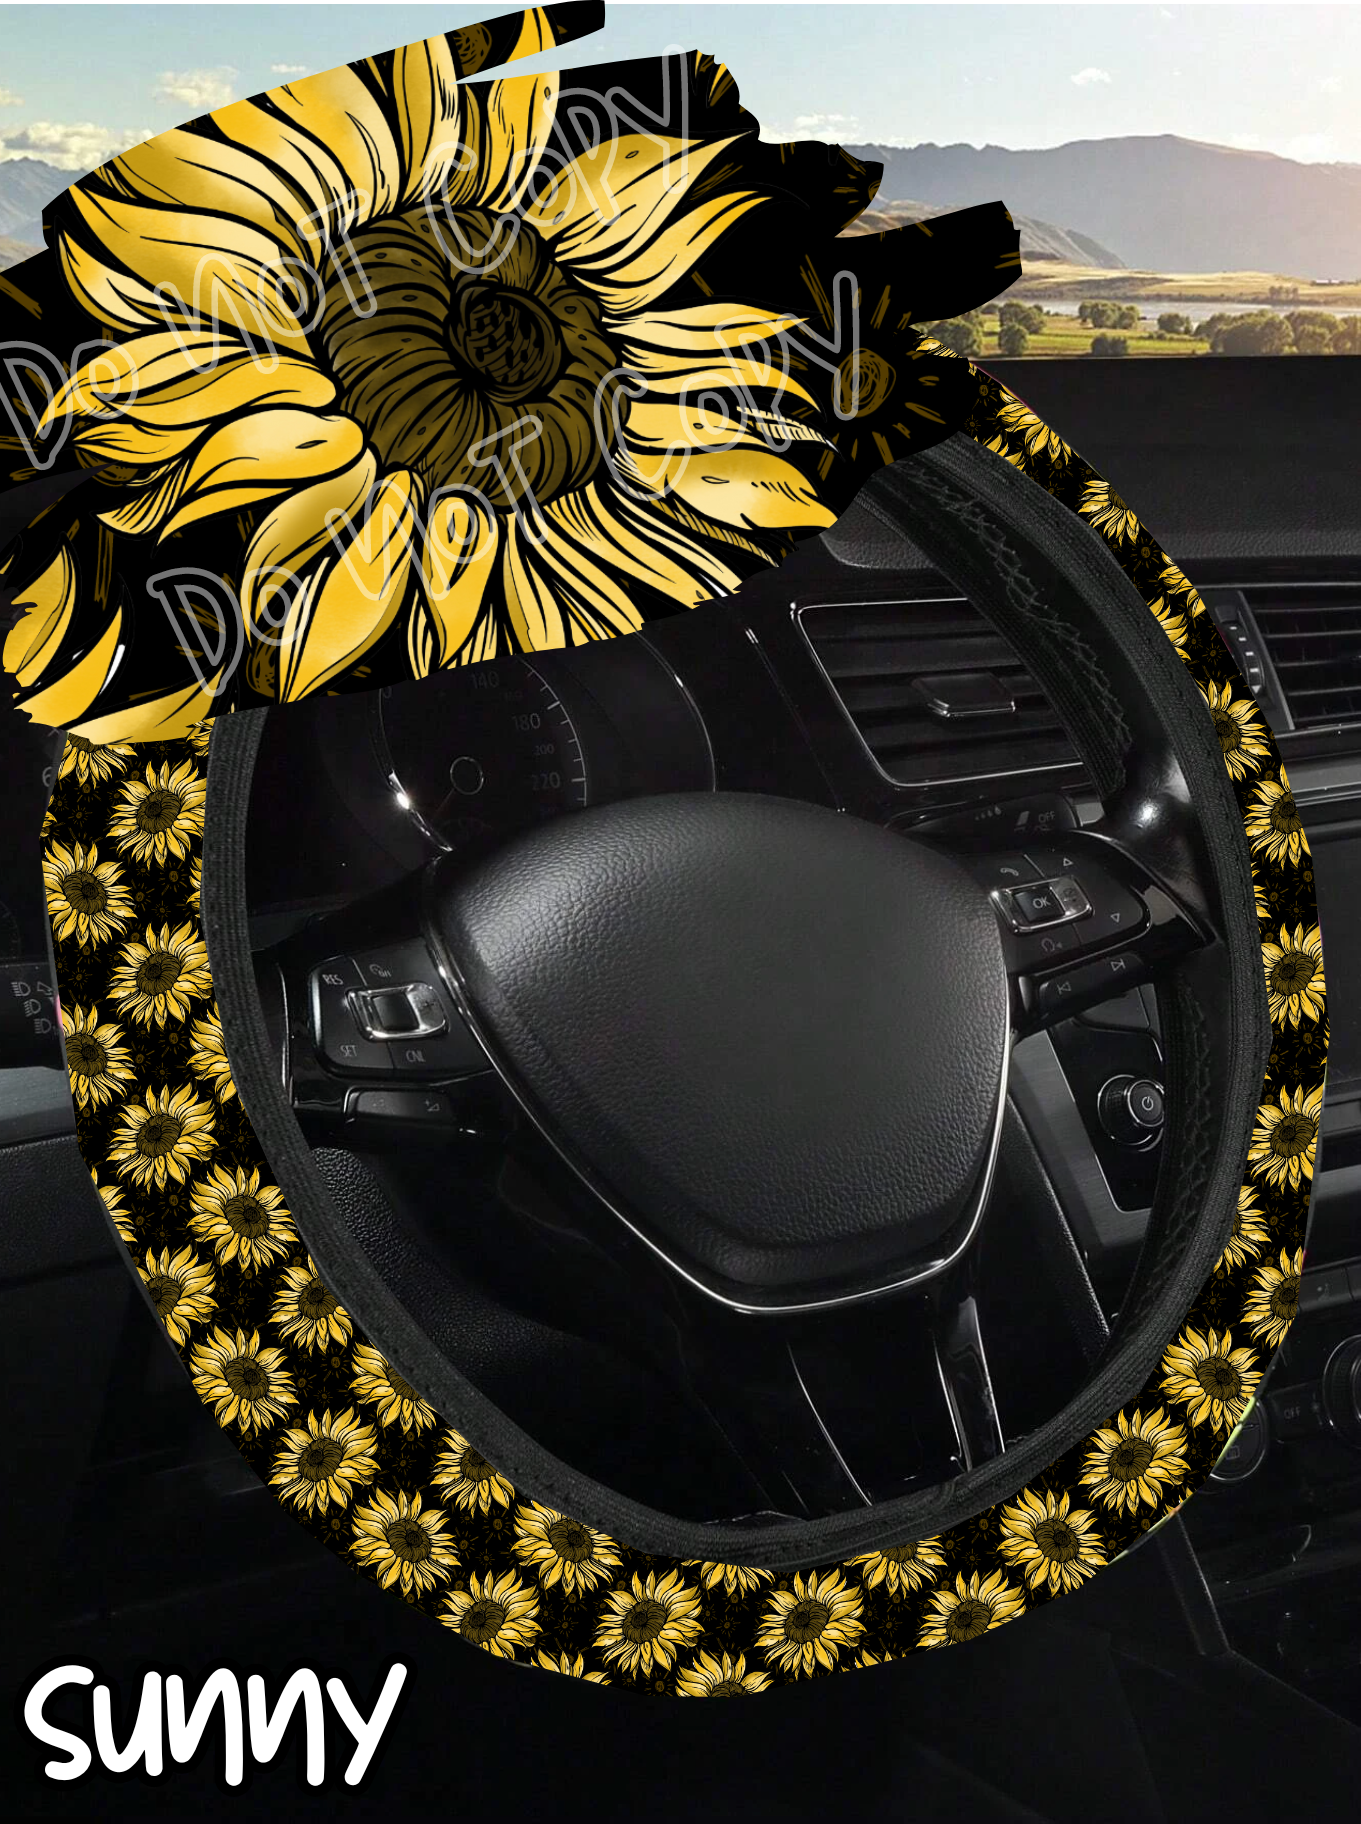 Sunny - Steering Wheel Cover Preorder Round 3 Closing 10/25 ETA Early Dec